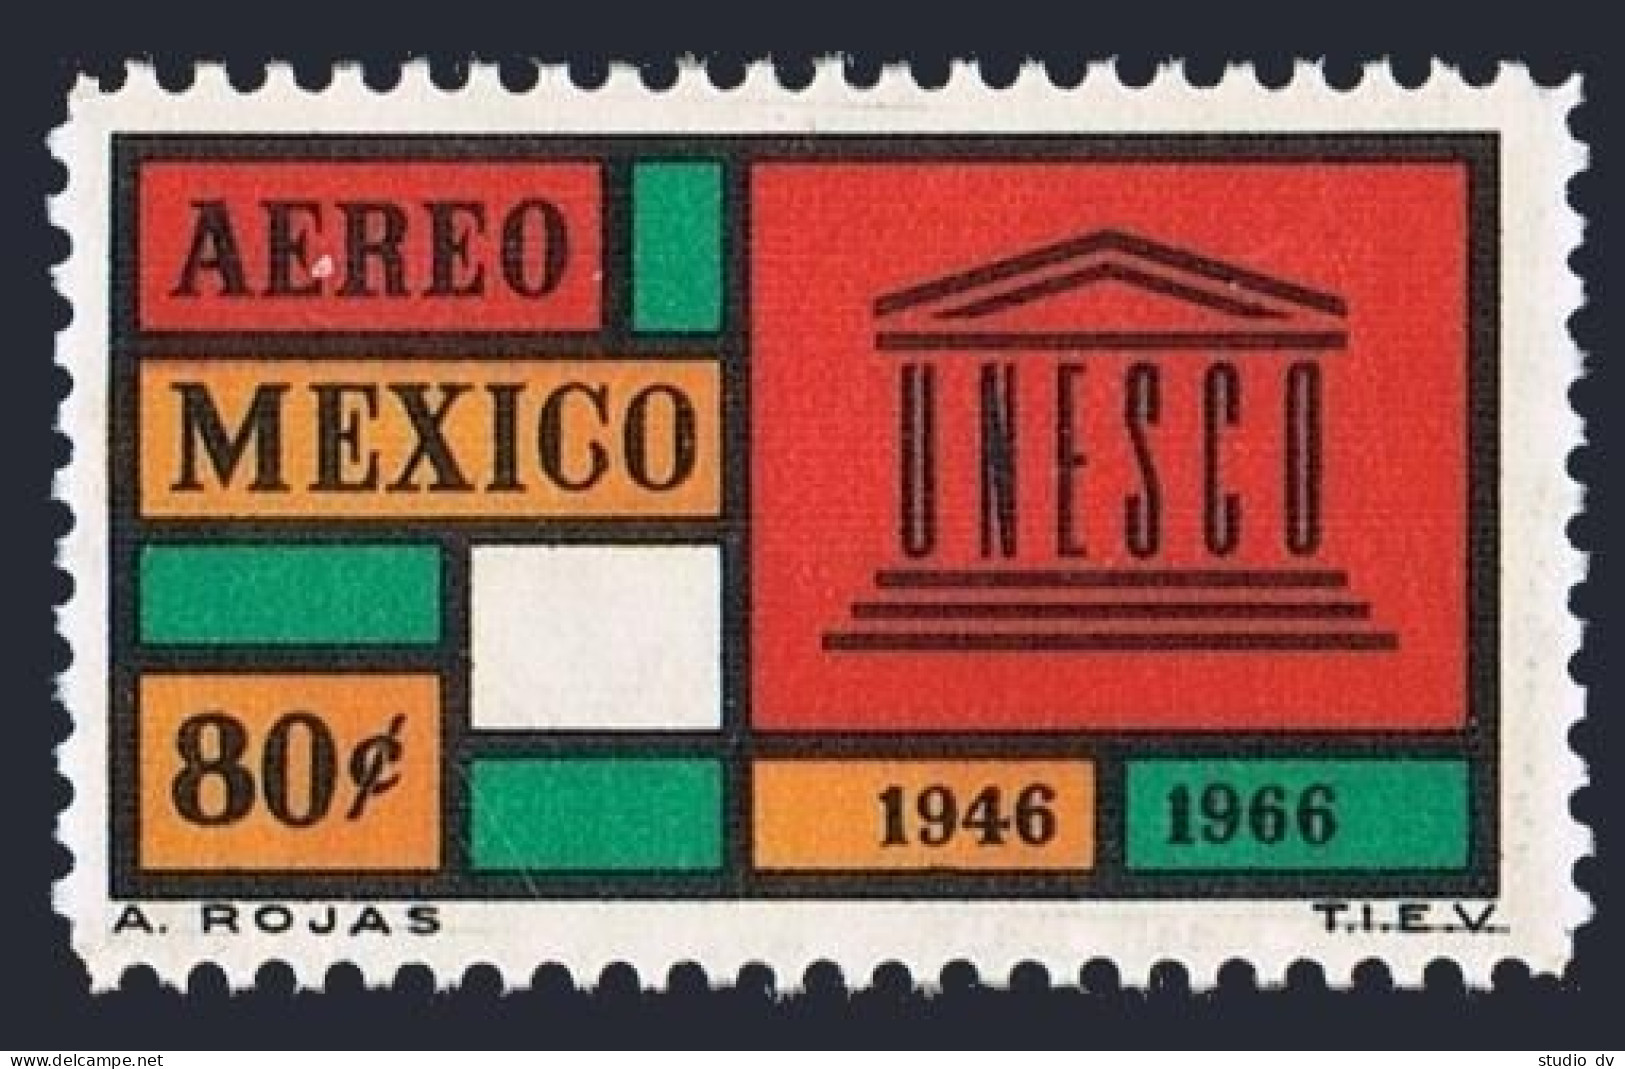 Mexico C321 Perf 11 Block/4,MNH.Michel 1224A. UNESCO,20th Ann.1966. - Messico